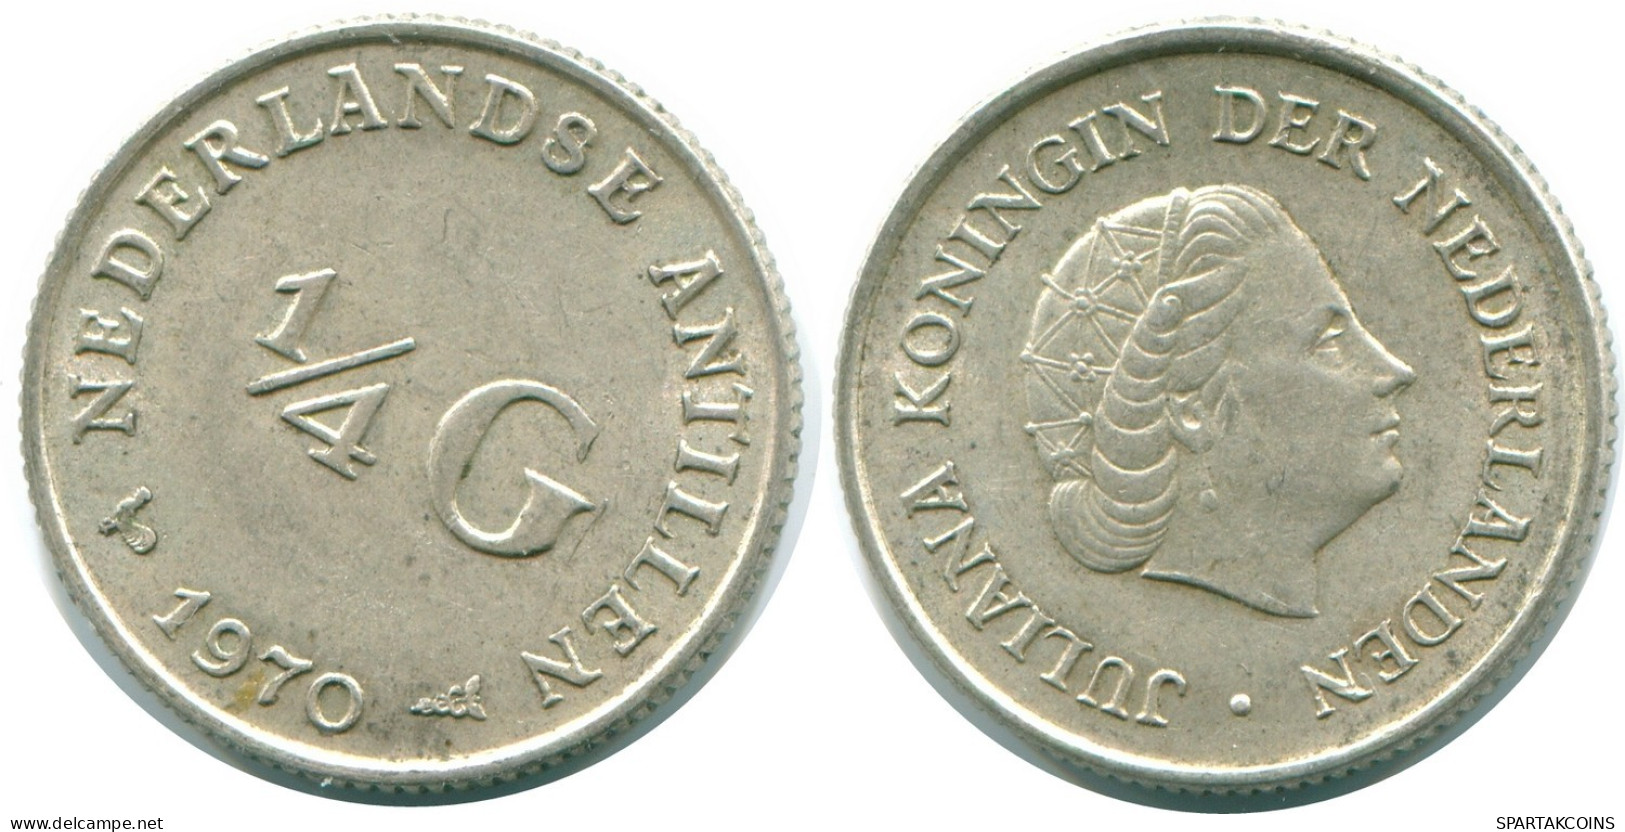 1/4 GULDEN 1970 NETHERLANDS ANTILLES SILVER Colonial Coin #NL11639.4.U.A - Netherlands Antilles